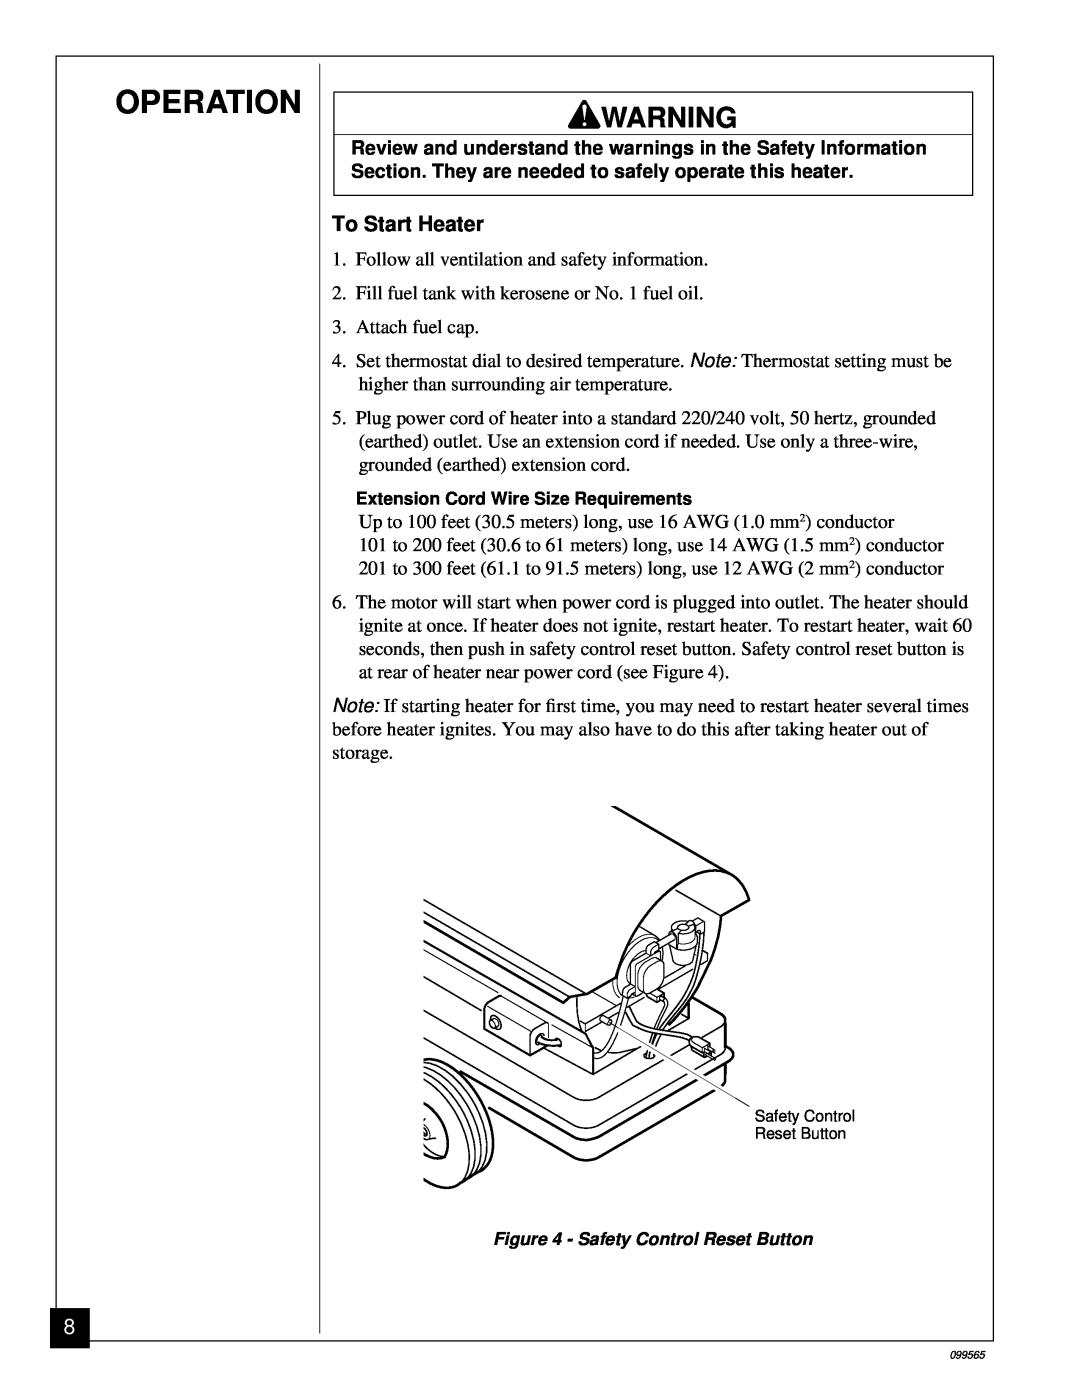 Master Lock B350EAI owner manual To Start Heater, Operation 